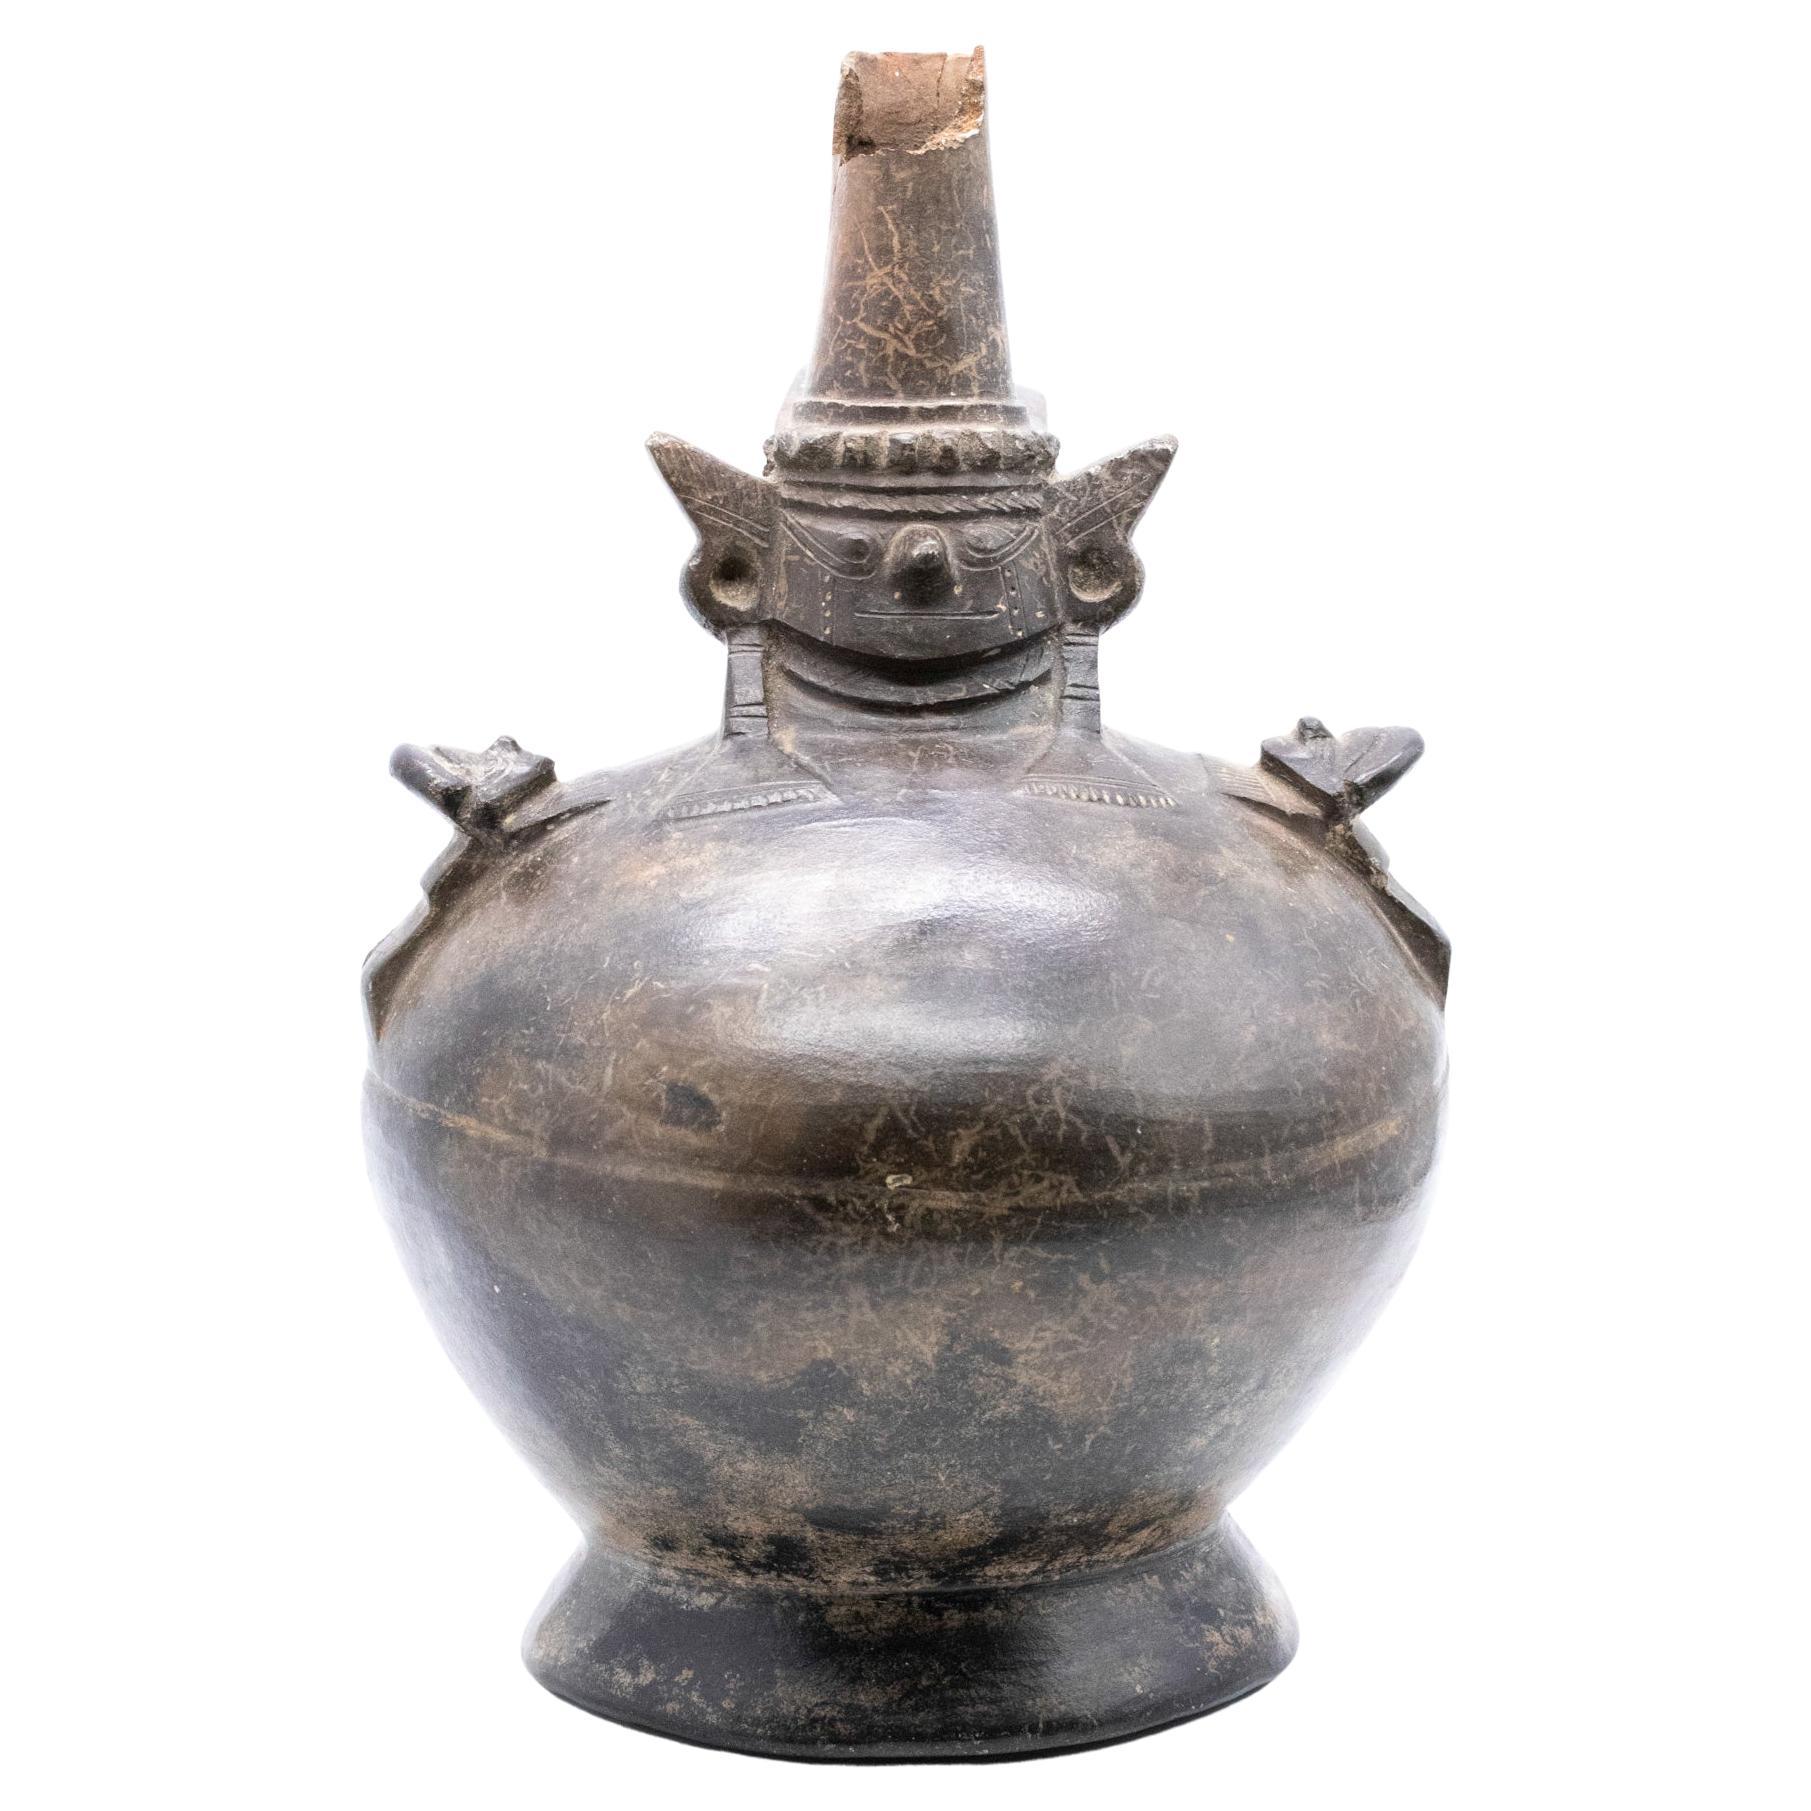 Peru Inca 1200 AD Lambayeque Pre-Columbian Blackware Ceramic Vase with Warrior